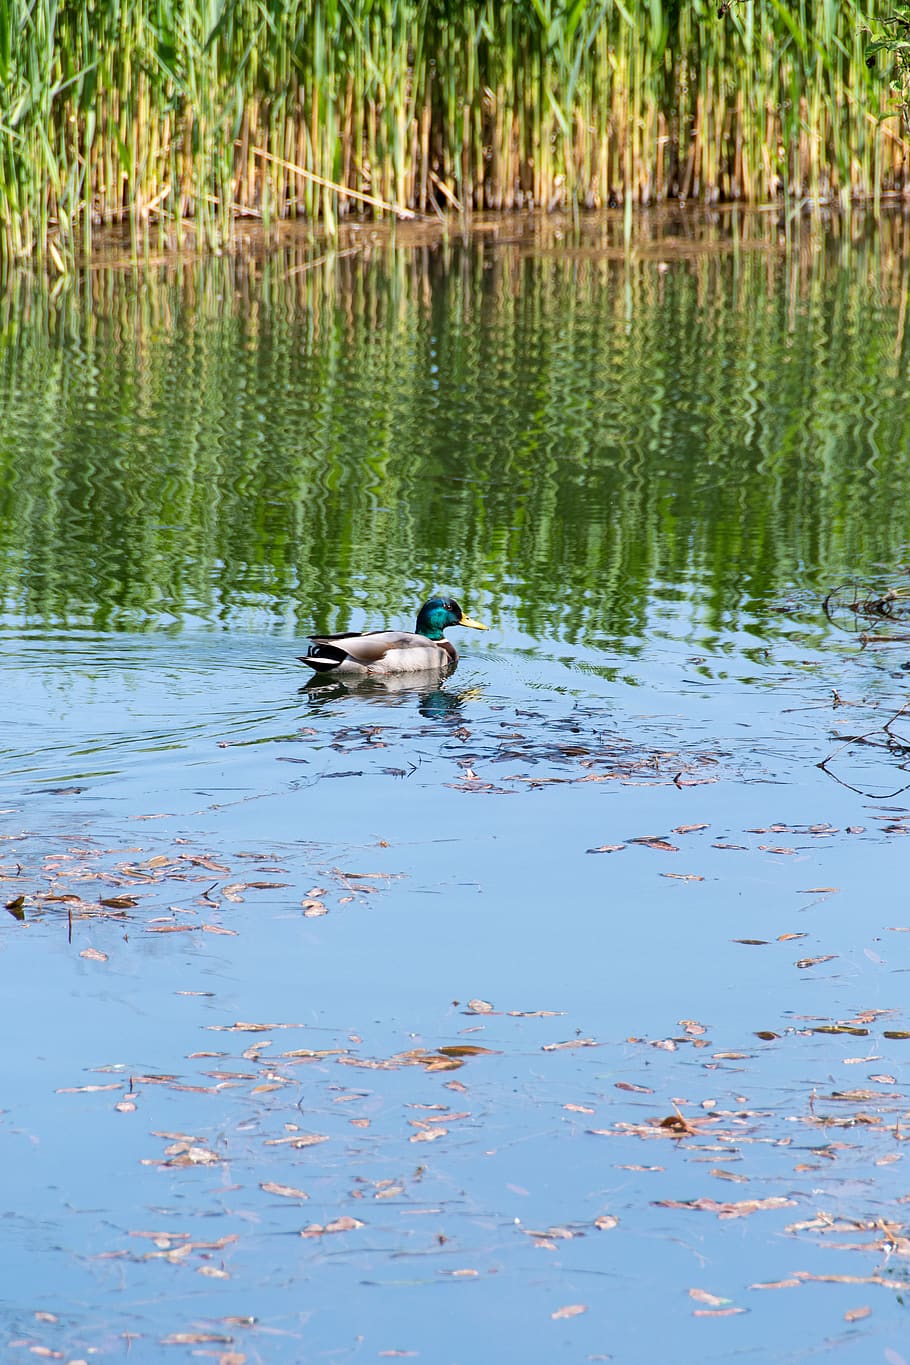 duck, crossword, pond, water, tom, reeds, reflection, animals, bird, kaczor